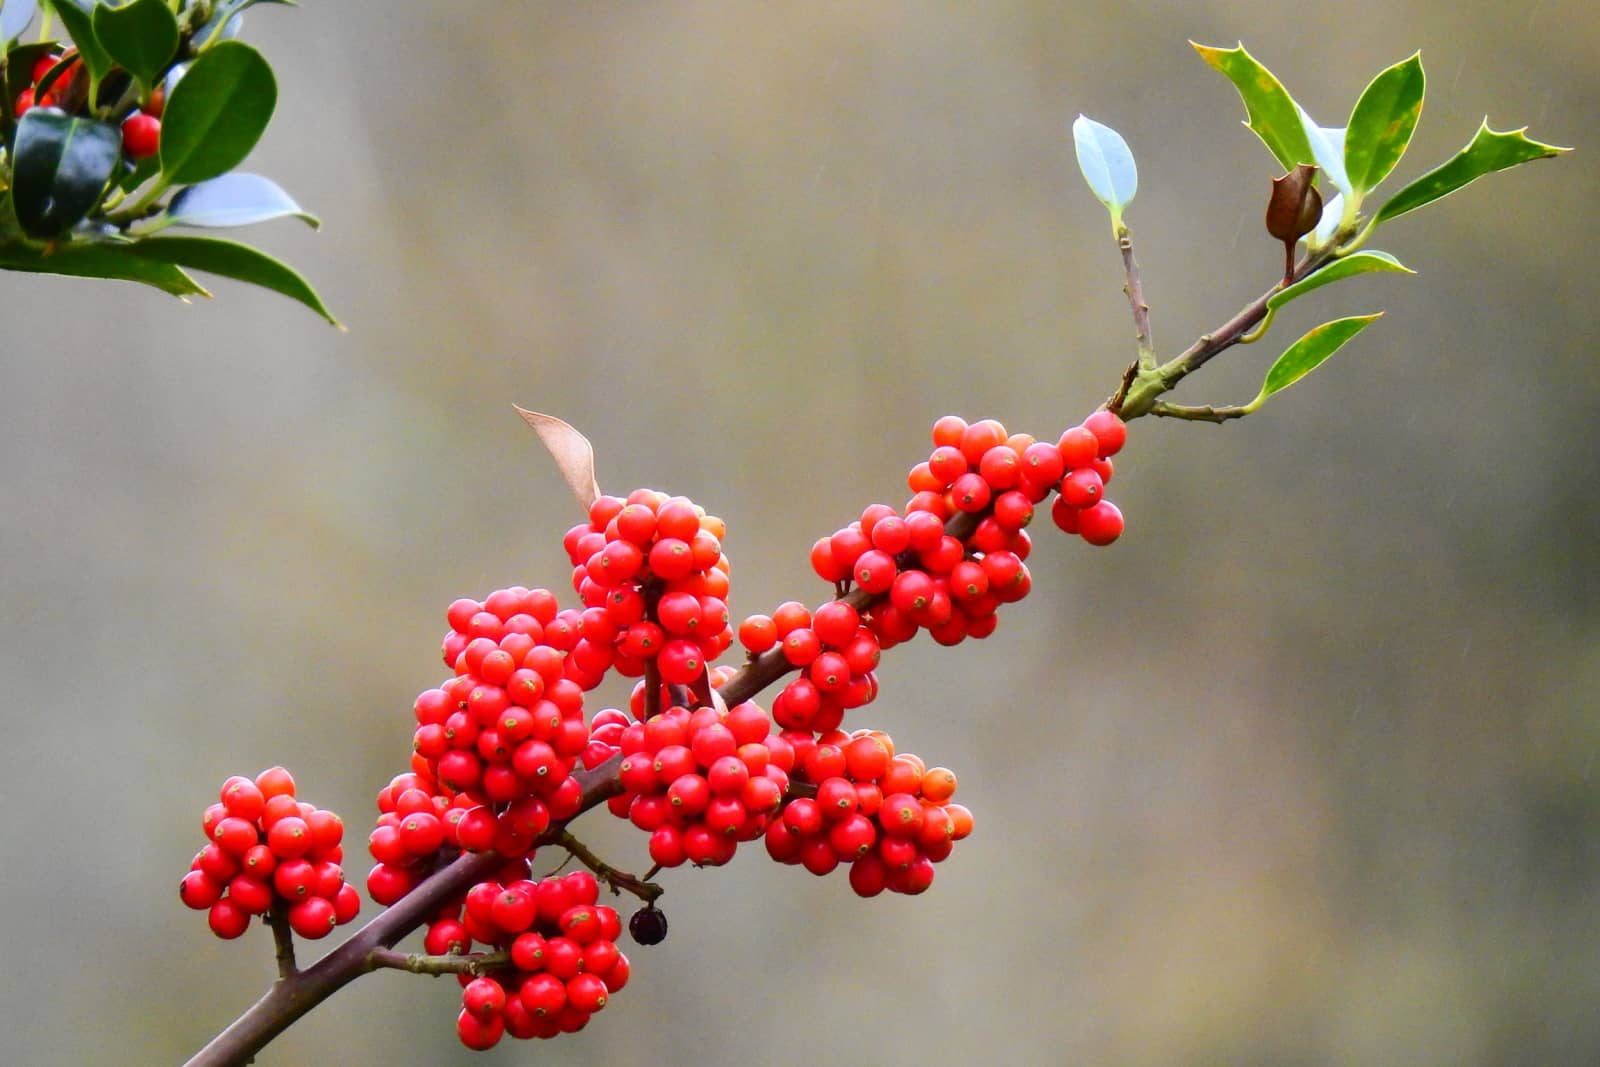 red berries of holly(Ilex aquifolium) on a gray background